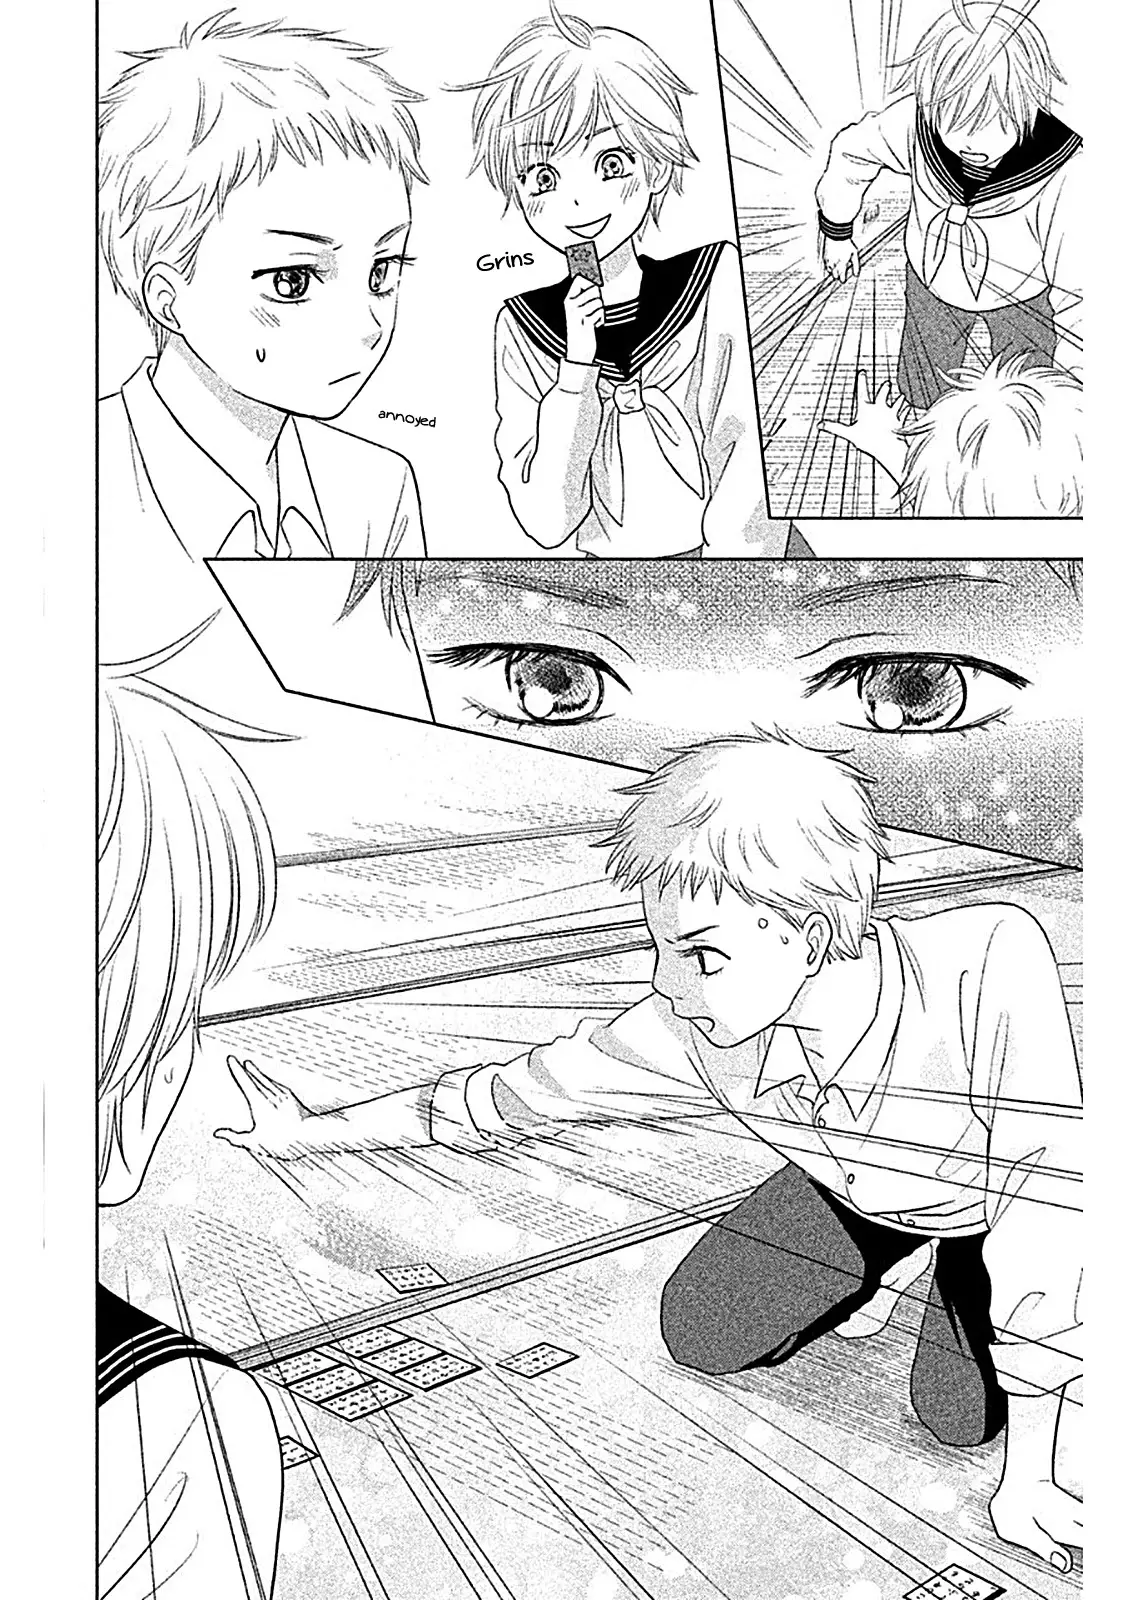 Chihayafuru: Middle School Arc - 3 page 15